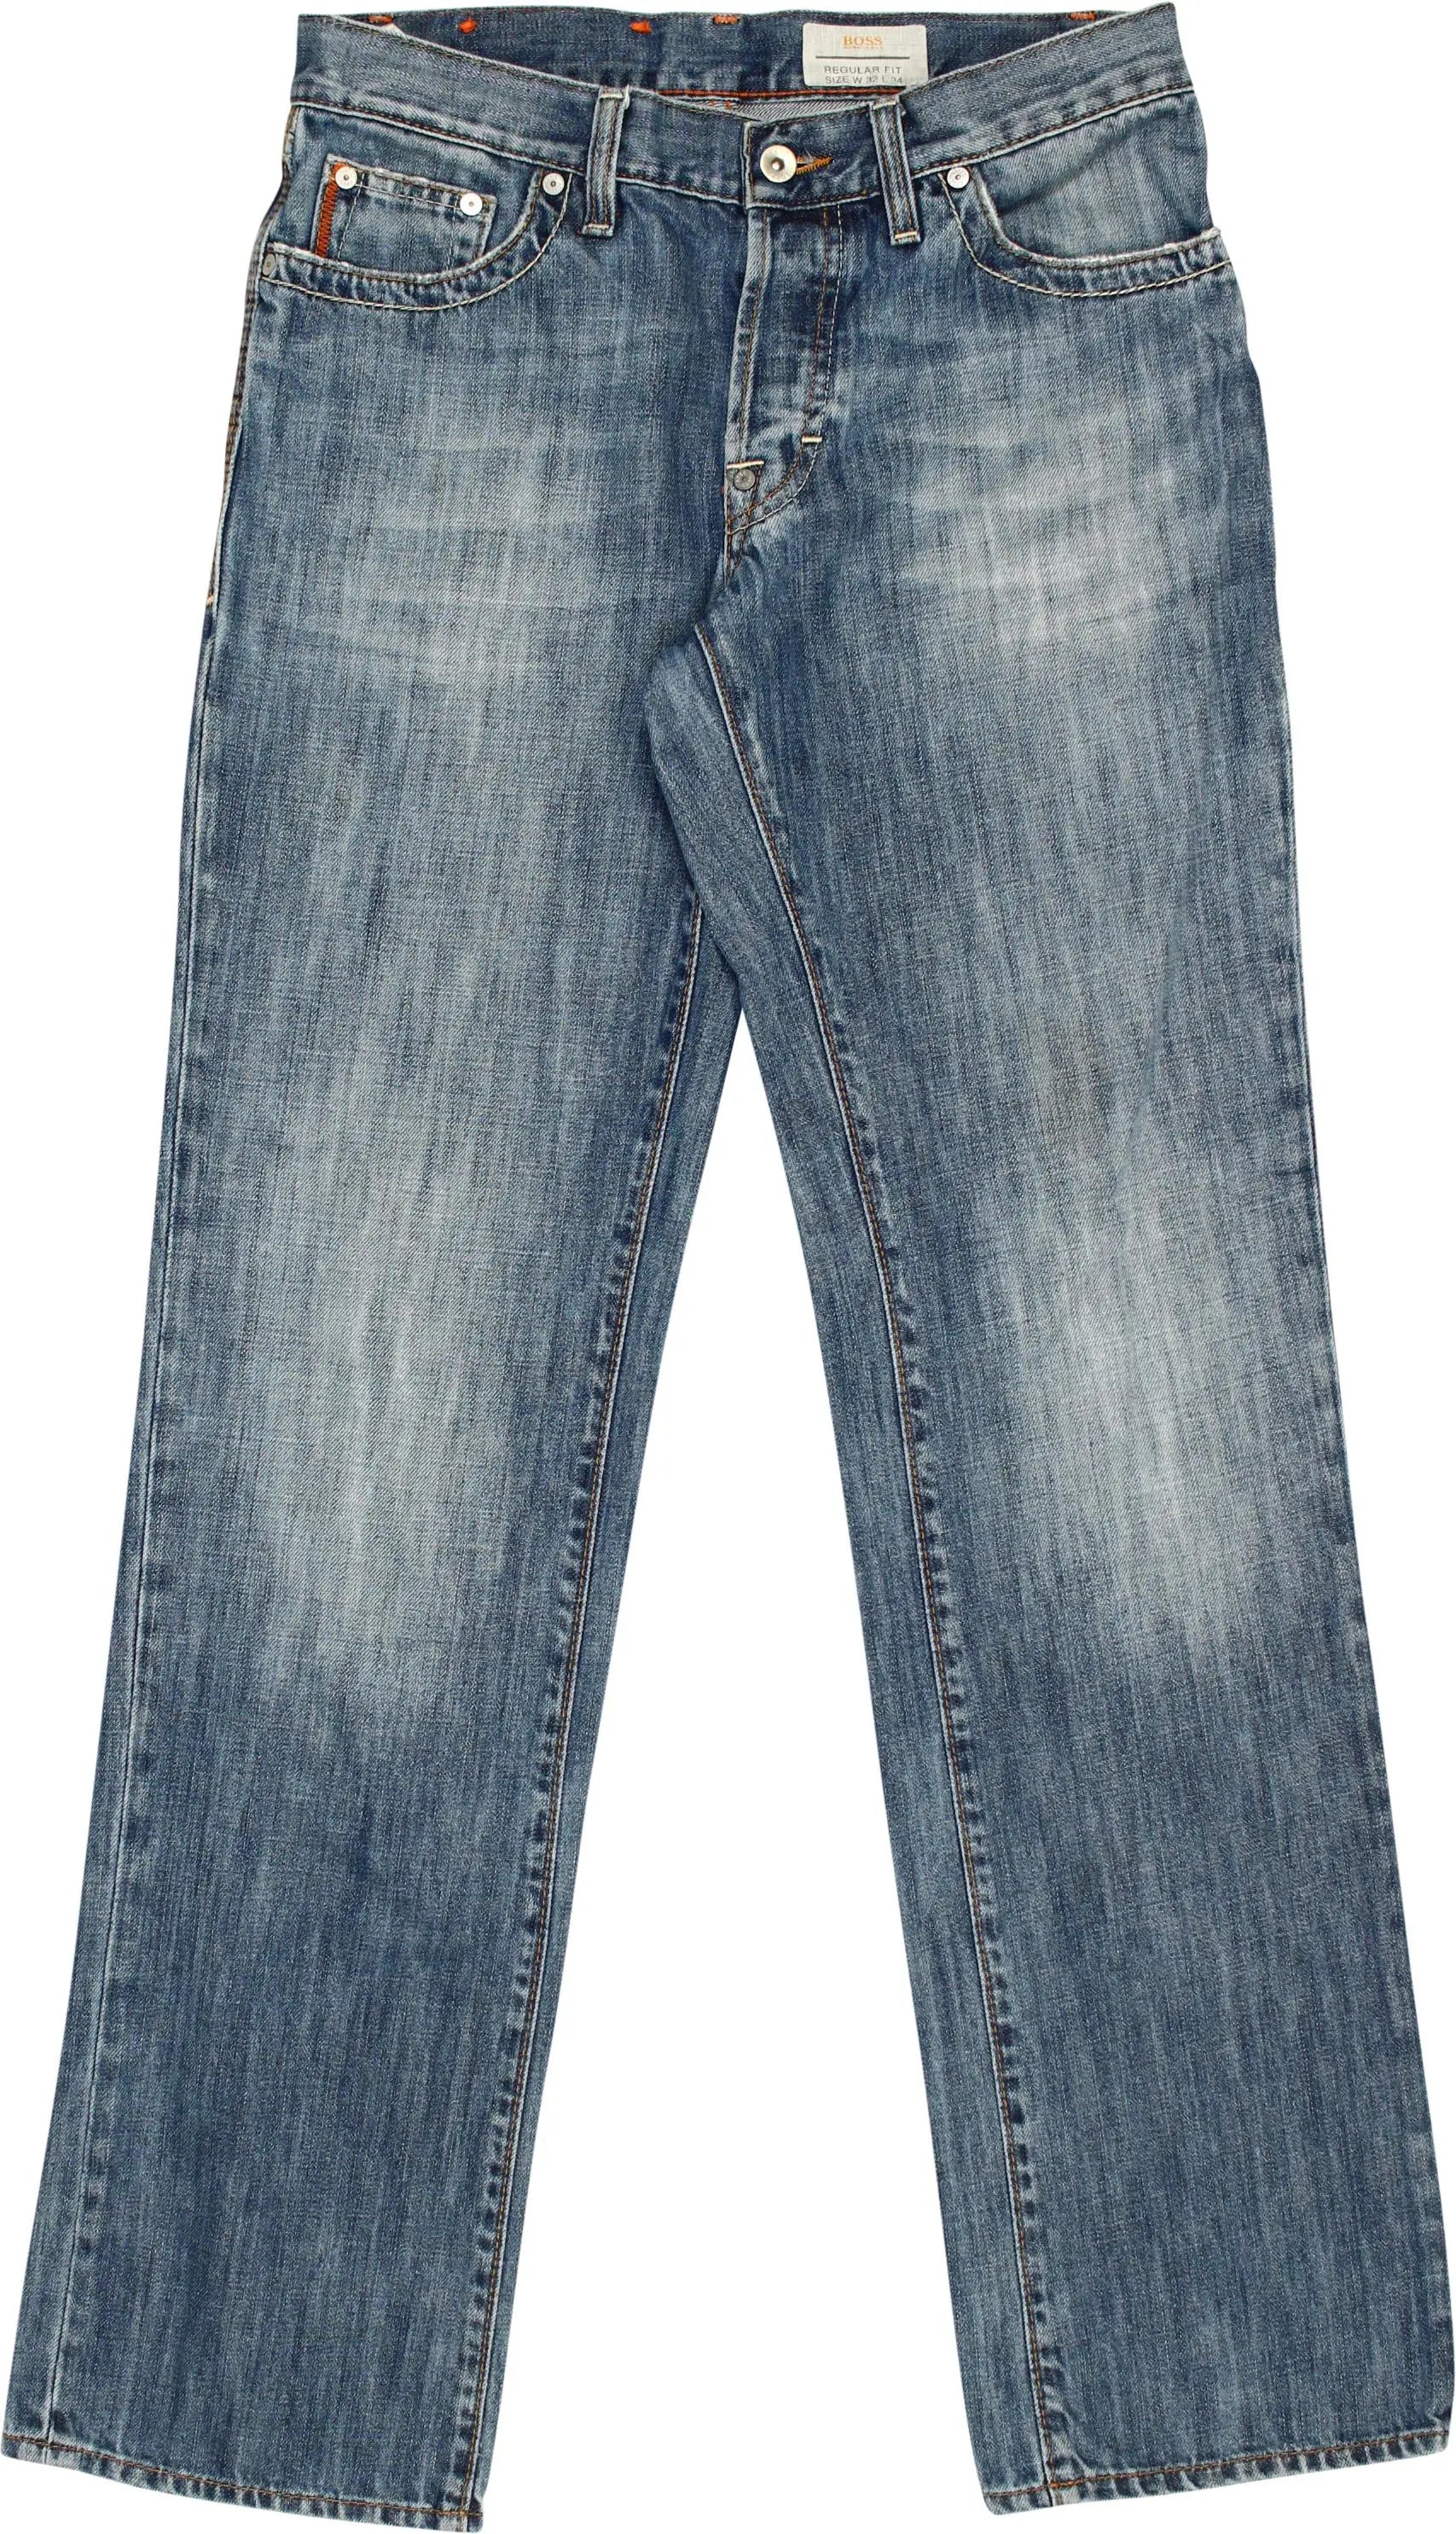 Hugo Boss - Regular Fit Jeans- ThriftTale.com - Vintage and second handclothing